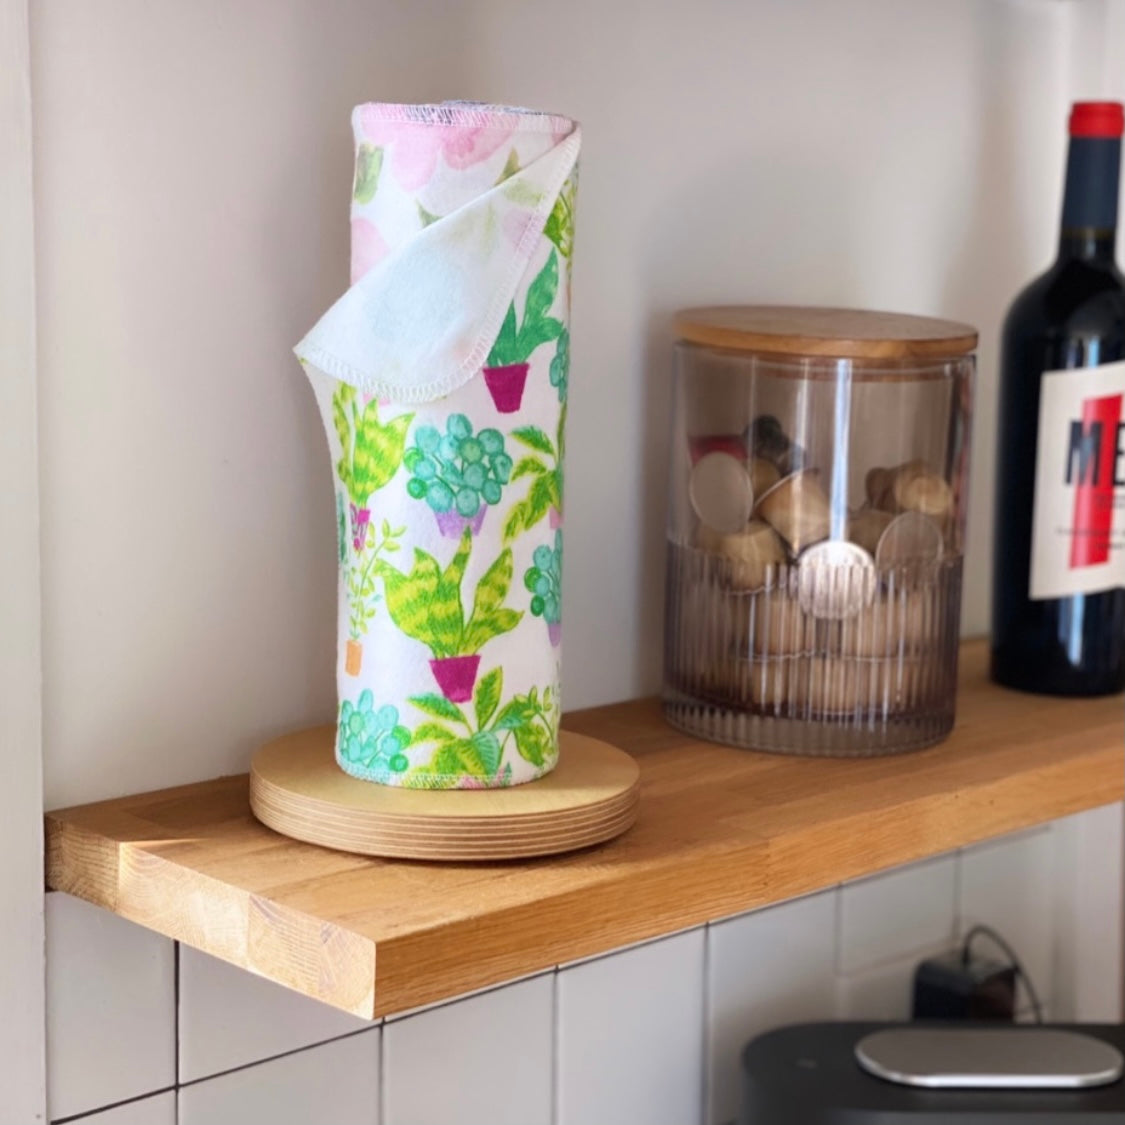 Reusable Paper Towels--Smiley Butterflies On Pink – Porter Lee's